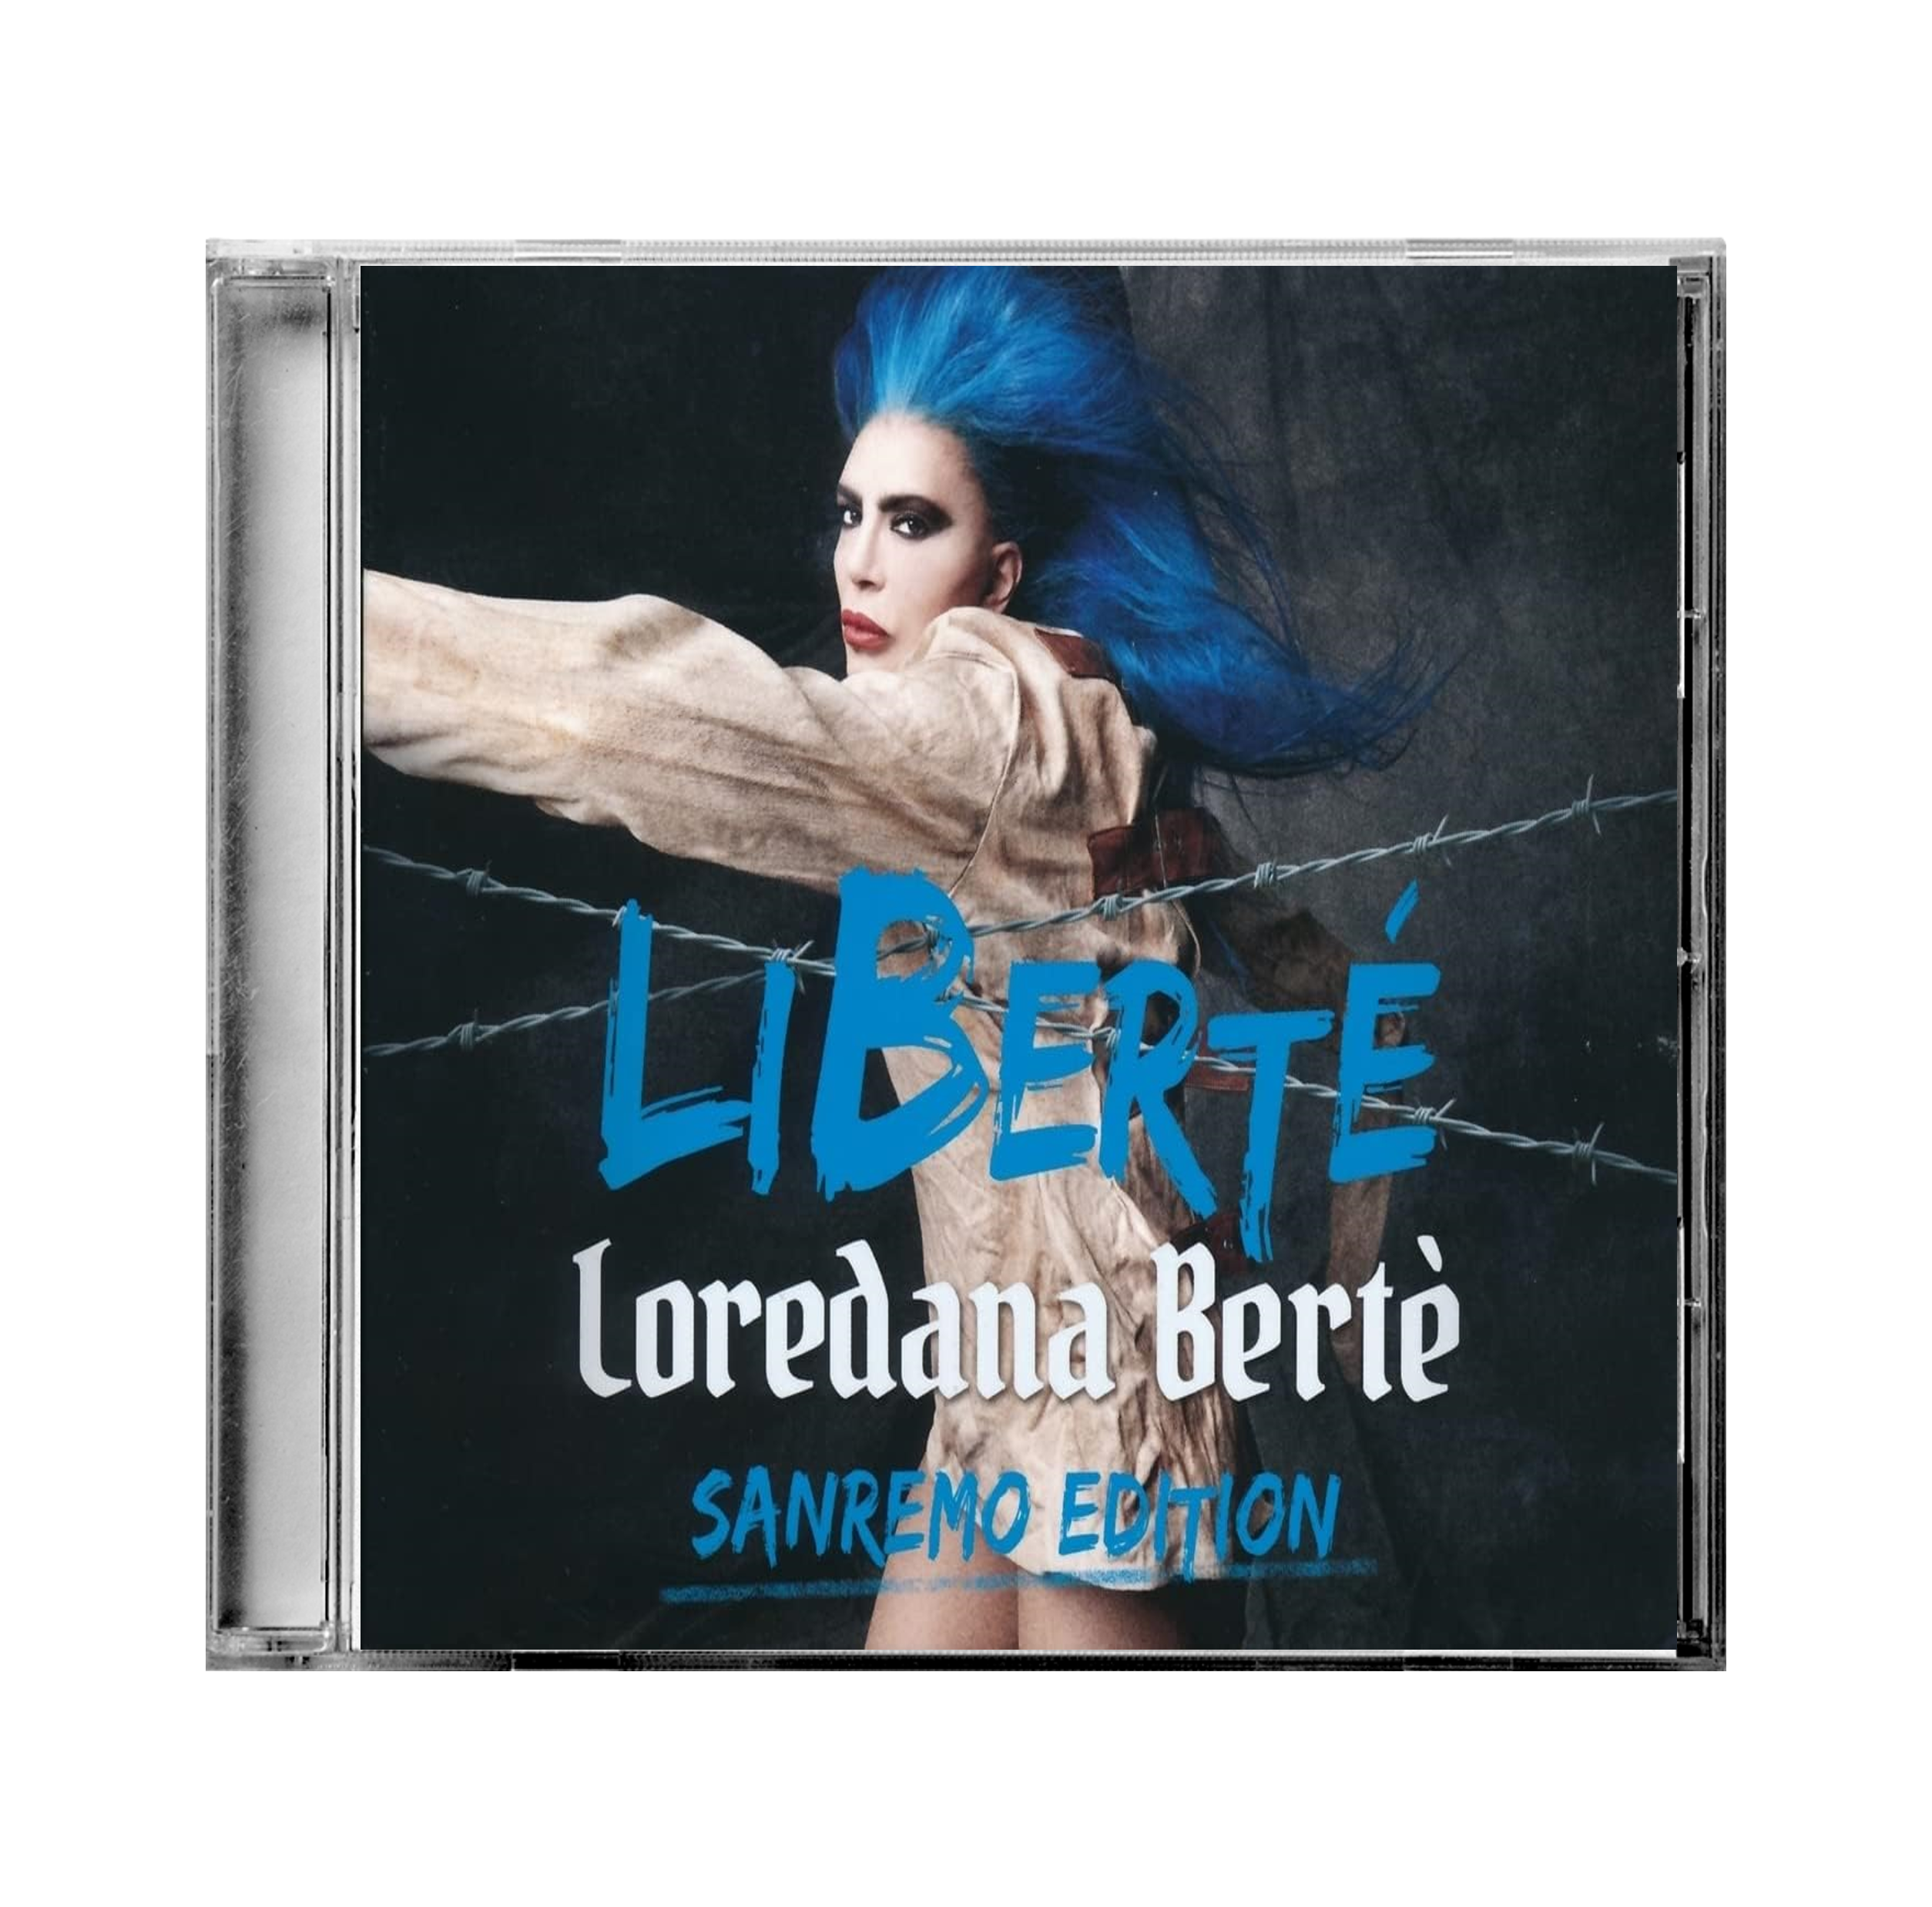 LiBerté (CD Sanremo Edition)